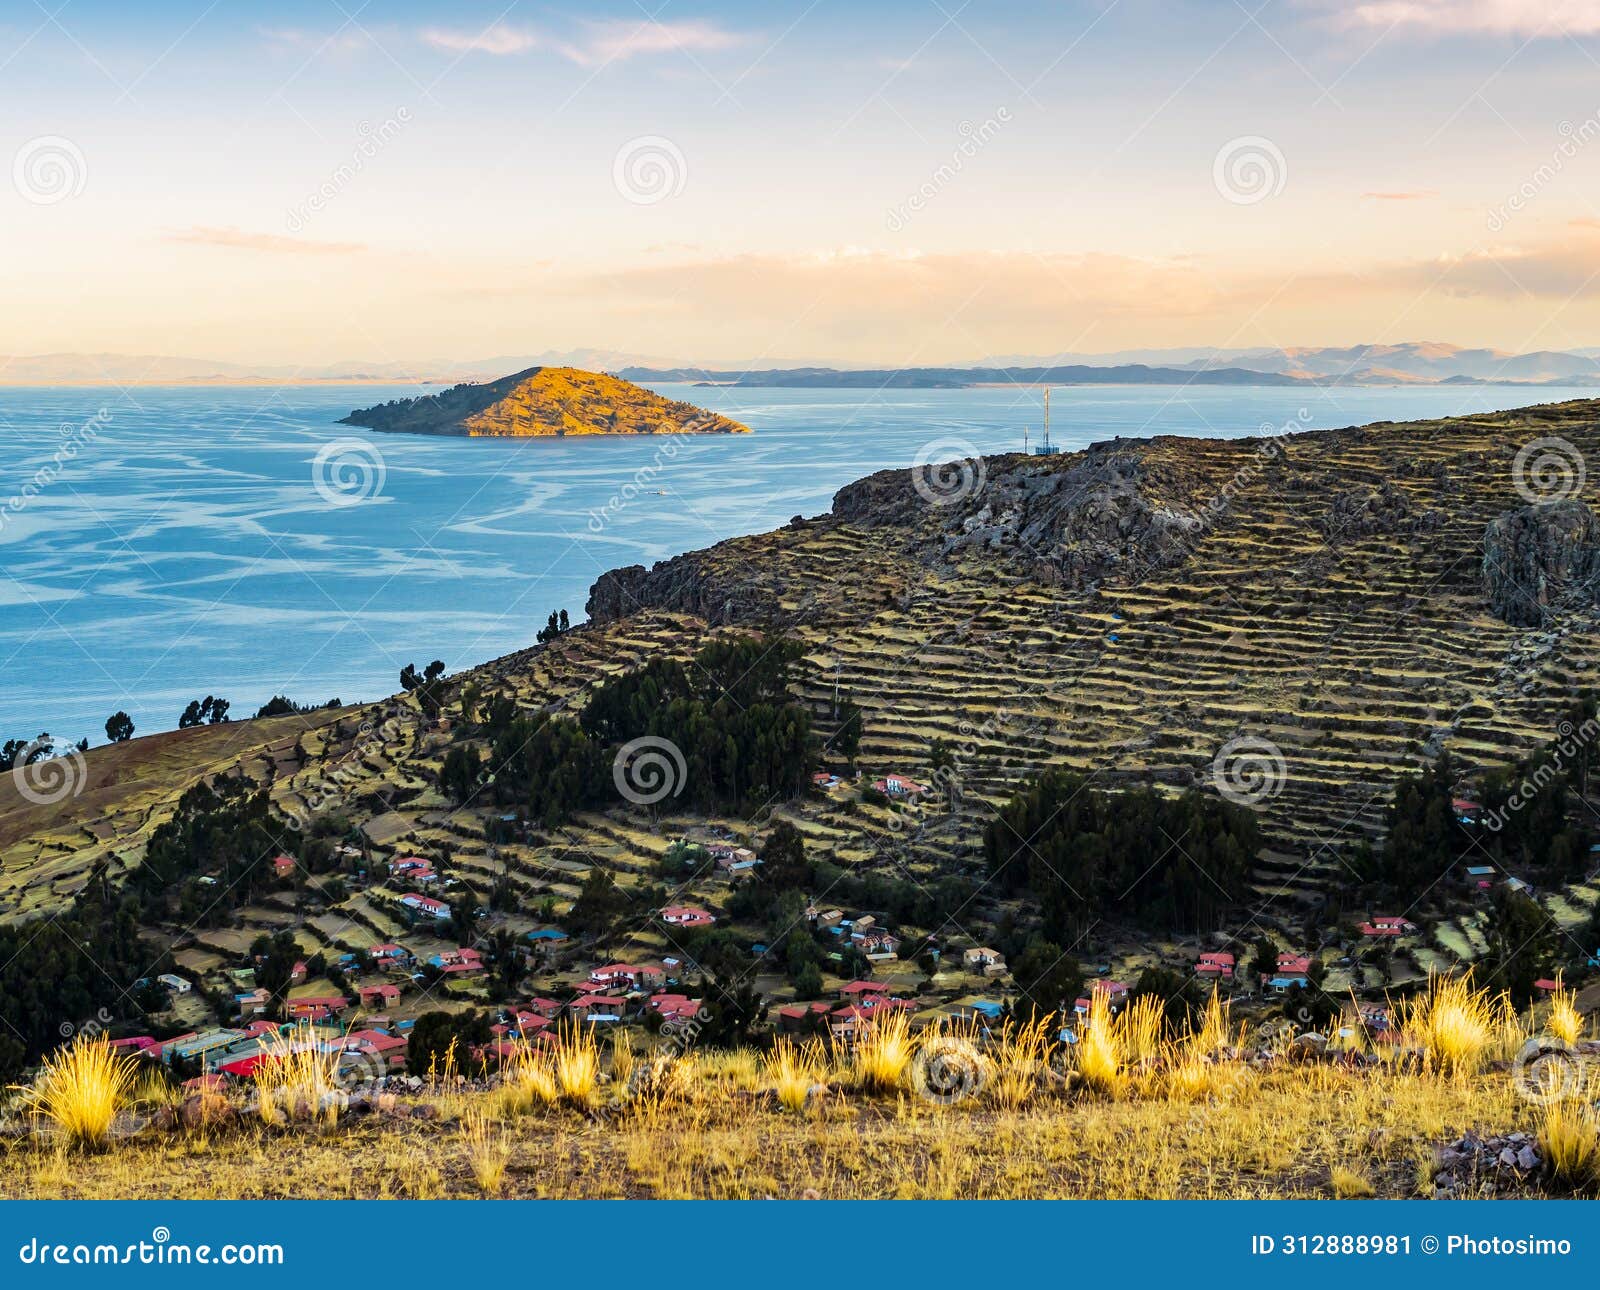 island amantani at sunset with stepped terraced fields, lake titicaca, puno region, peru